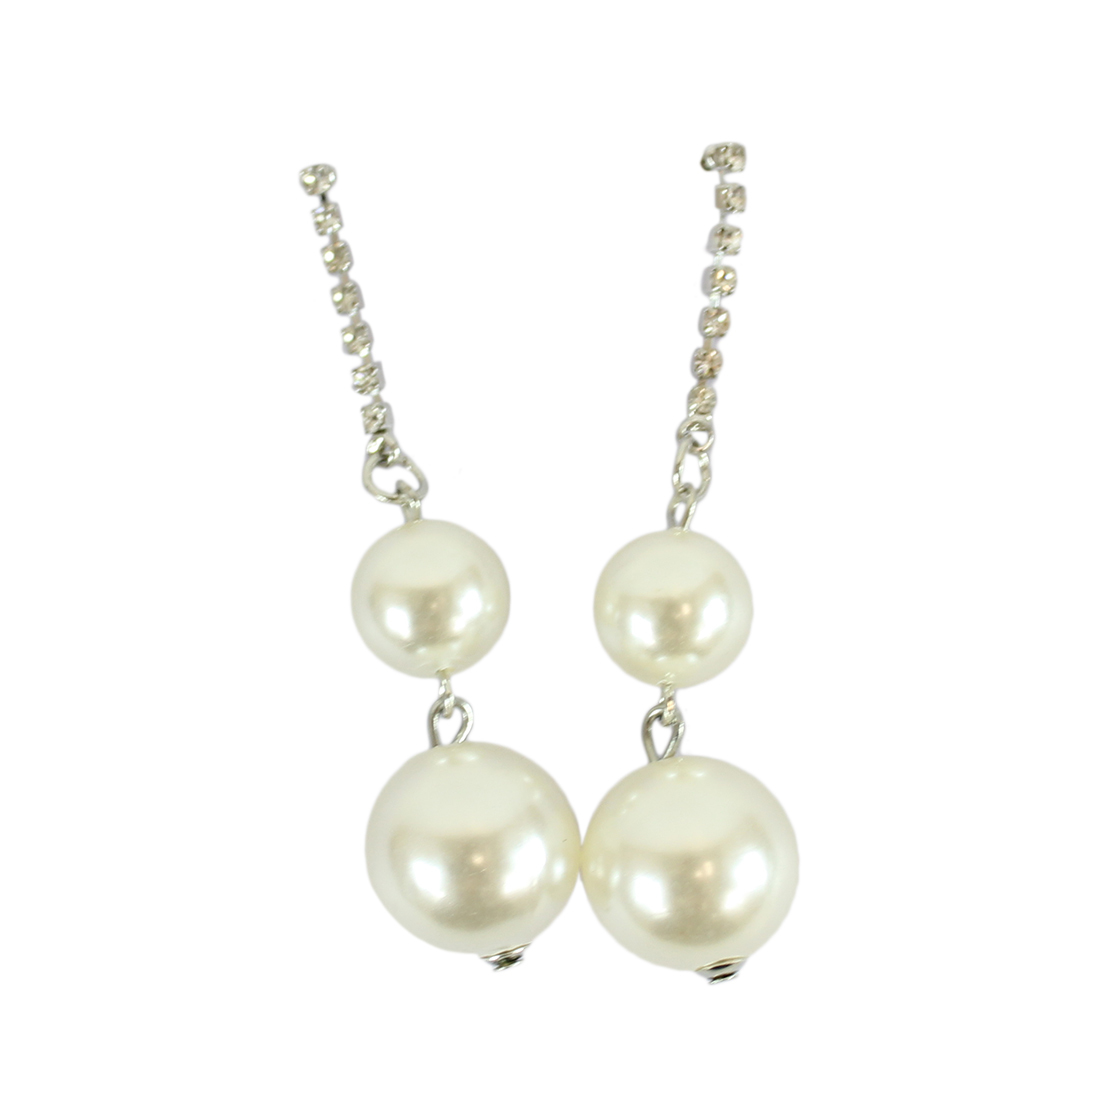 Dangle pearl earrings with diamond start